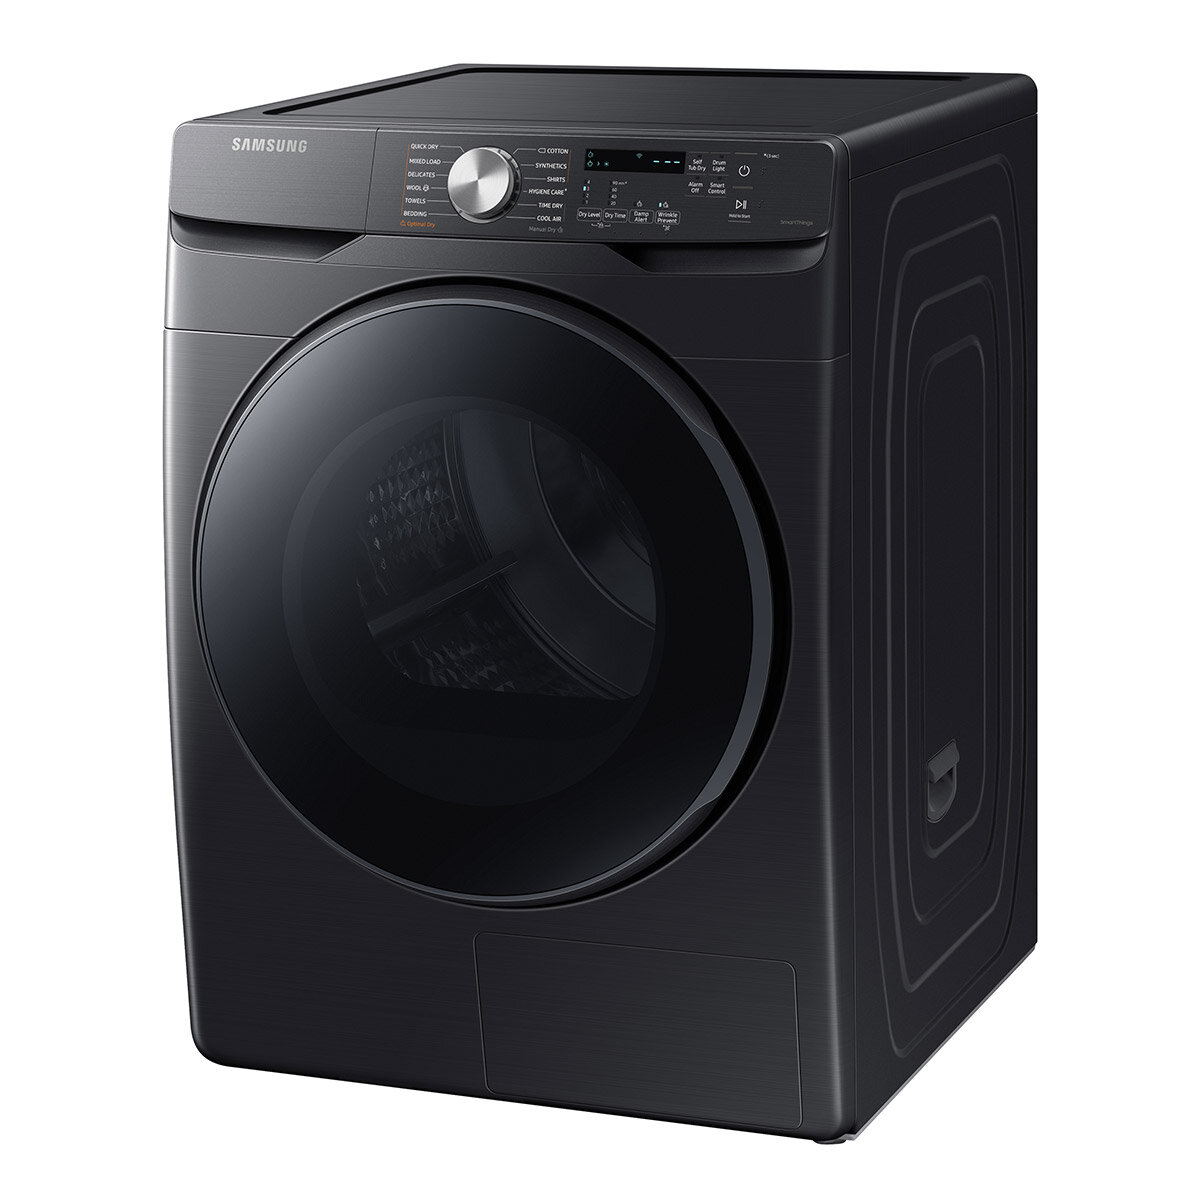 Samsung DV16T8520BV/EU, 16kg, Large Capacity Heat Pump Dryer, A+++ Rated in Black